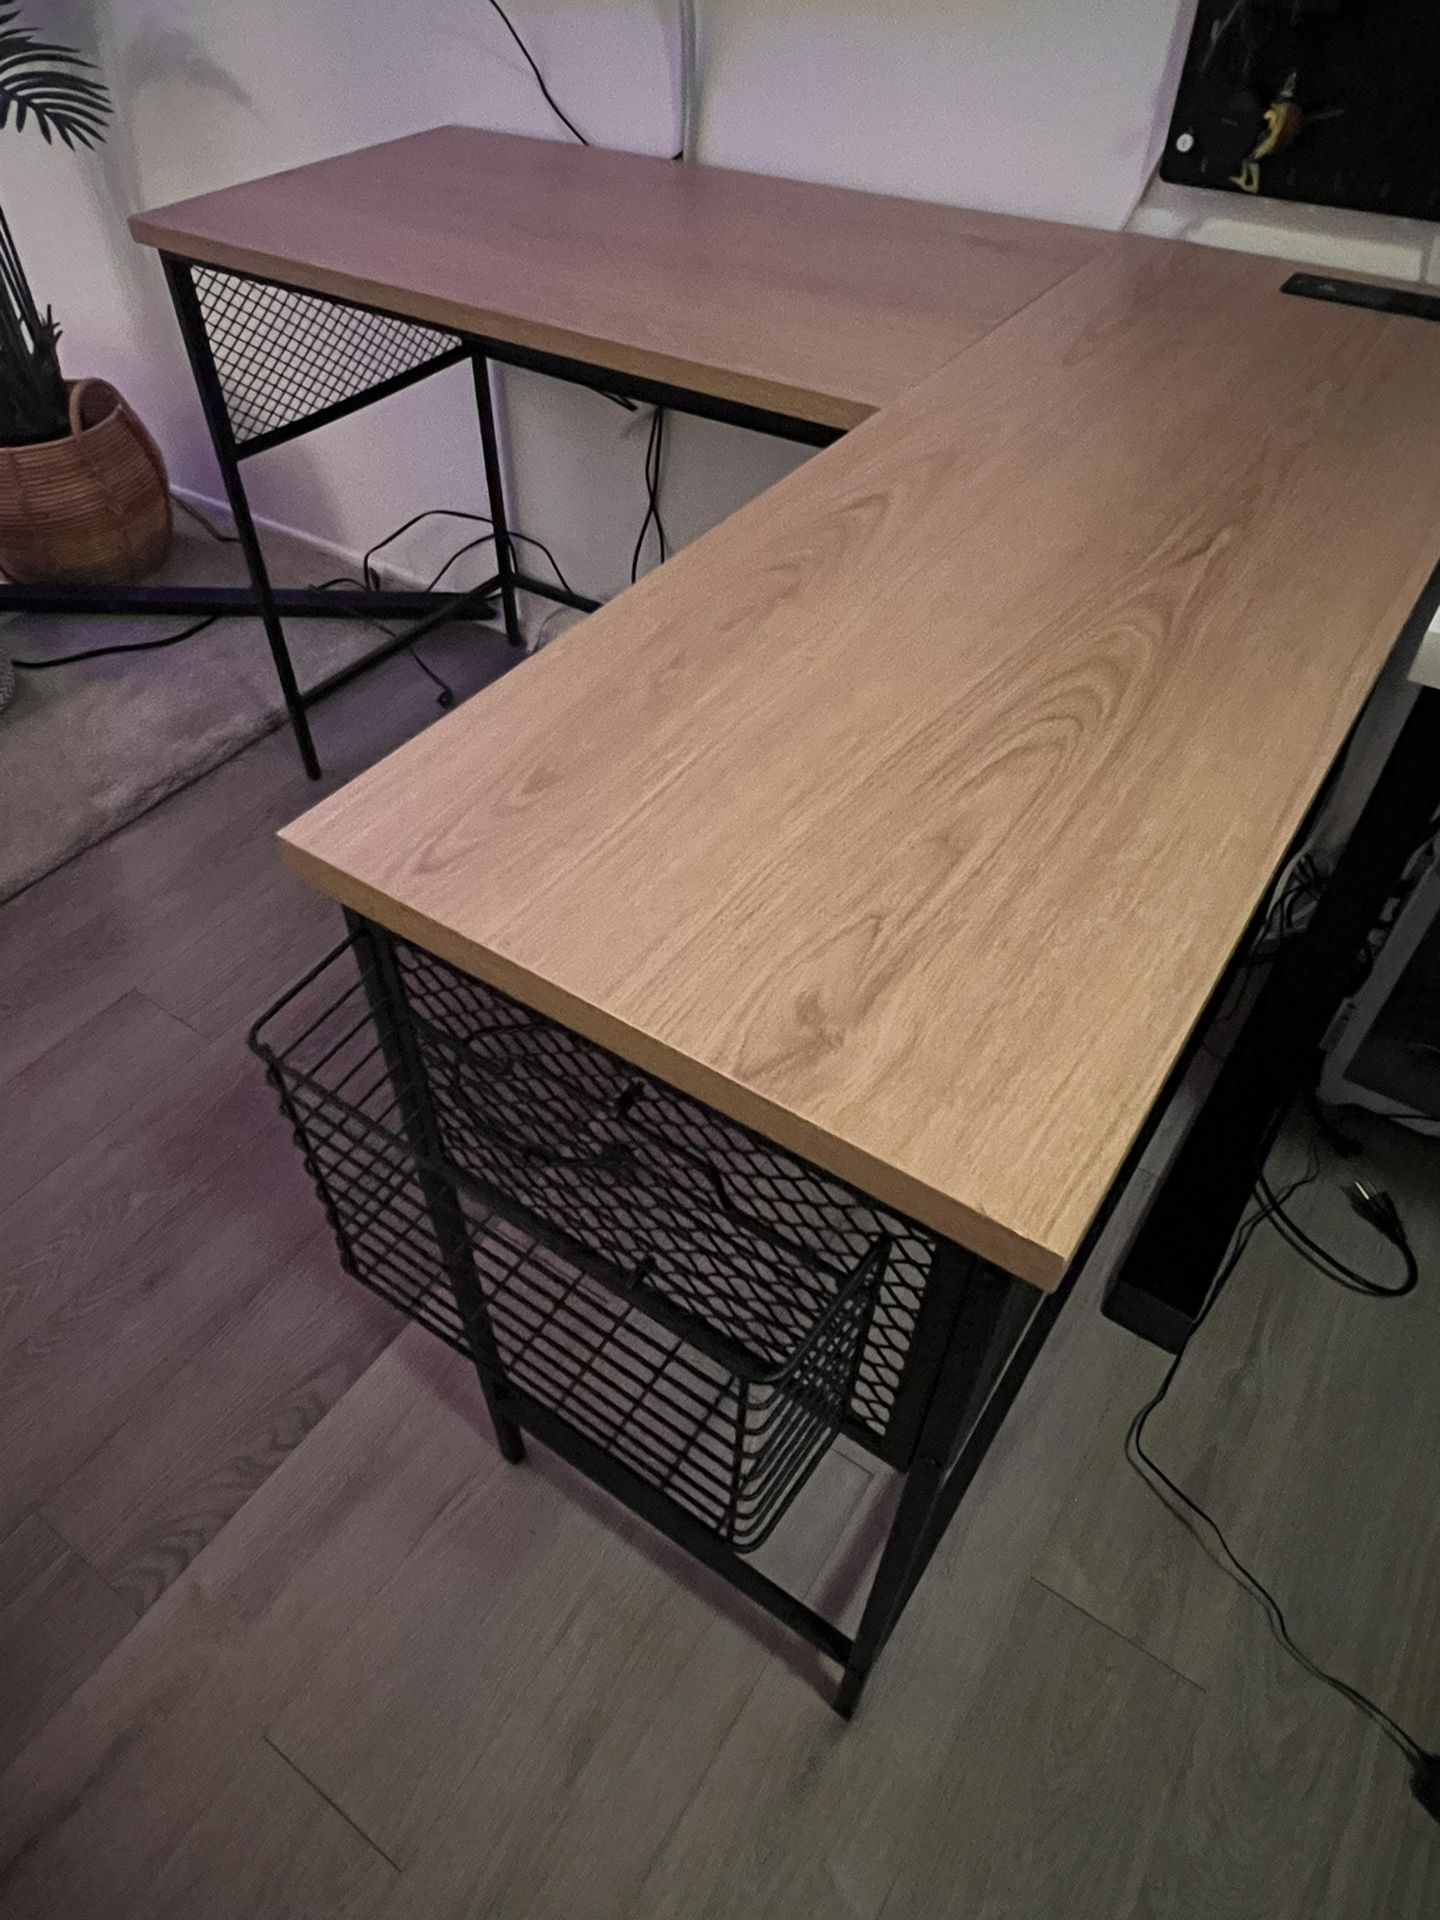 L Shaped Desk - Wood grain With USB port